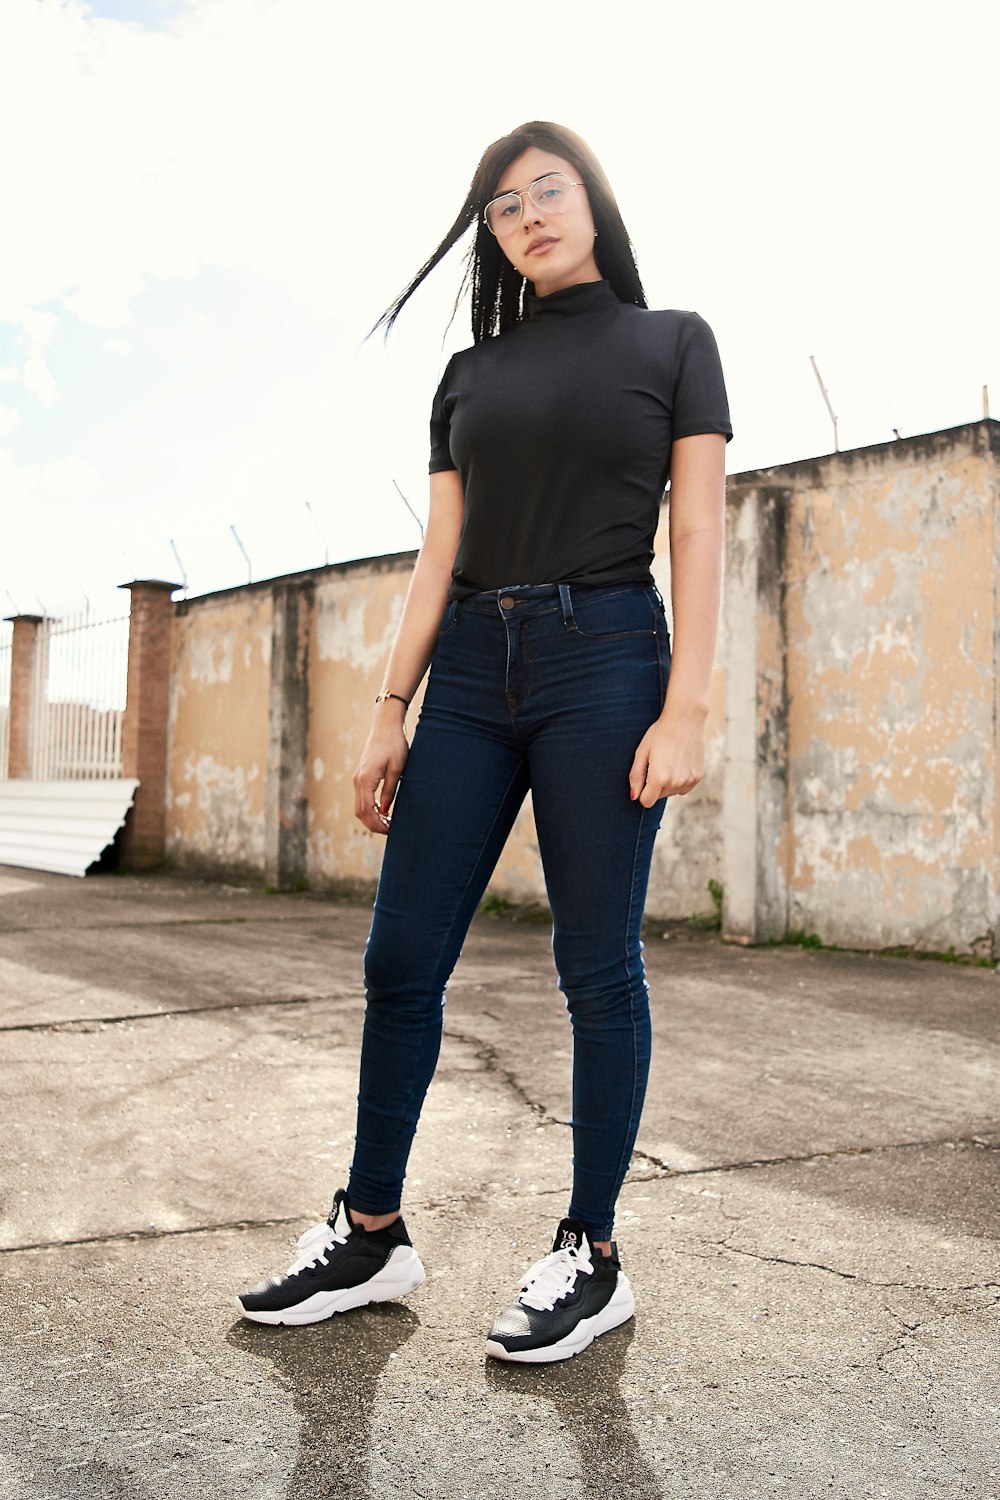 Woman wearing black shirt and black pants photo – Free Medellín Image on  Unsplash